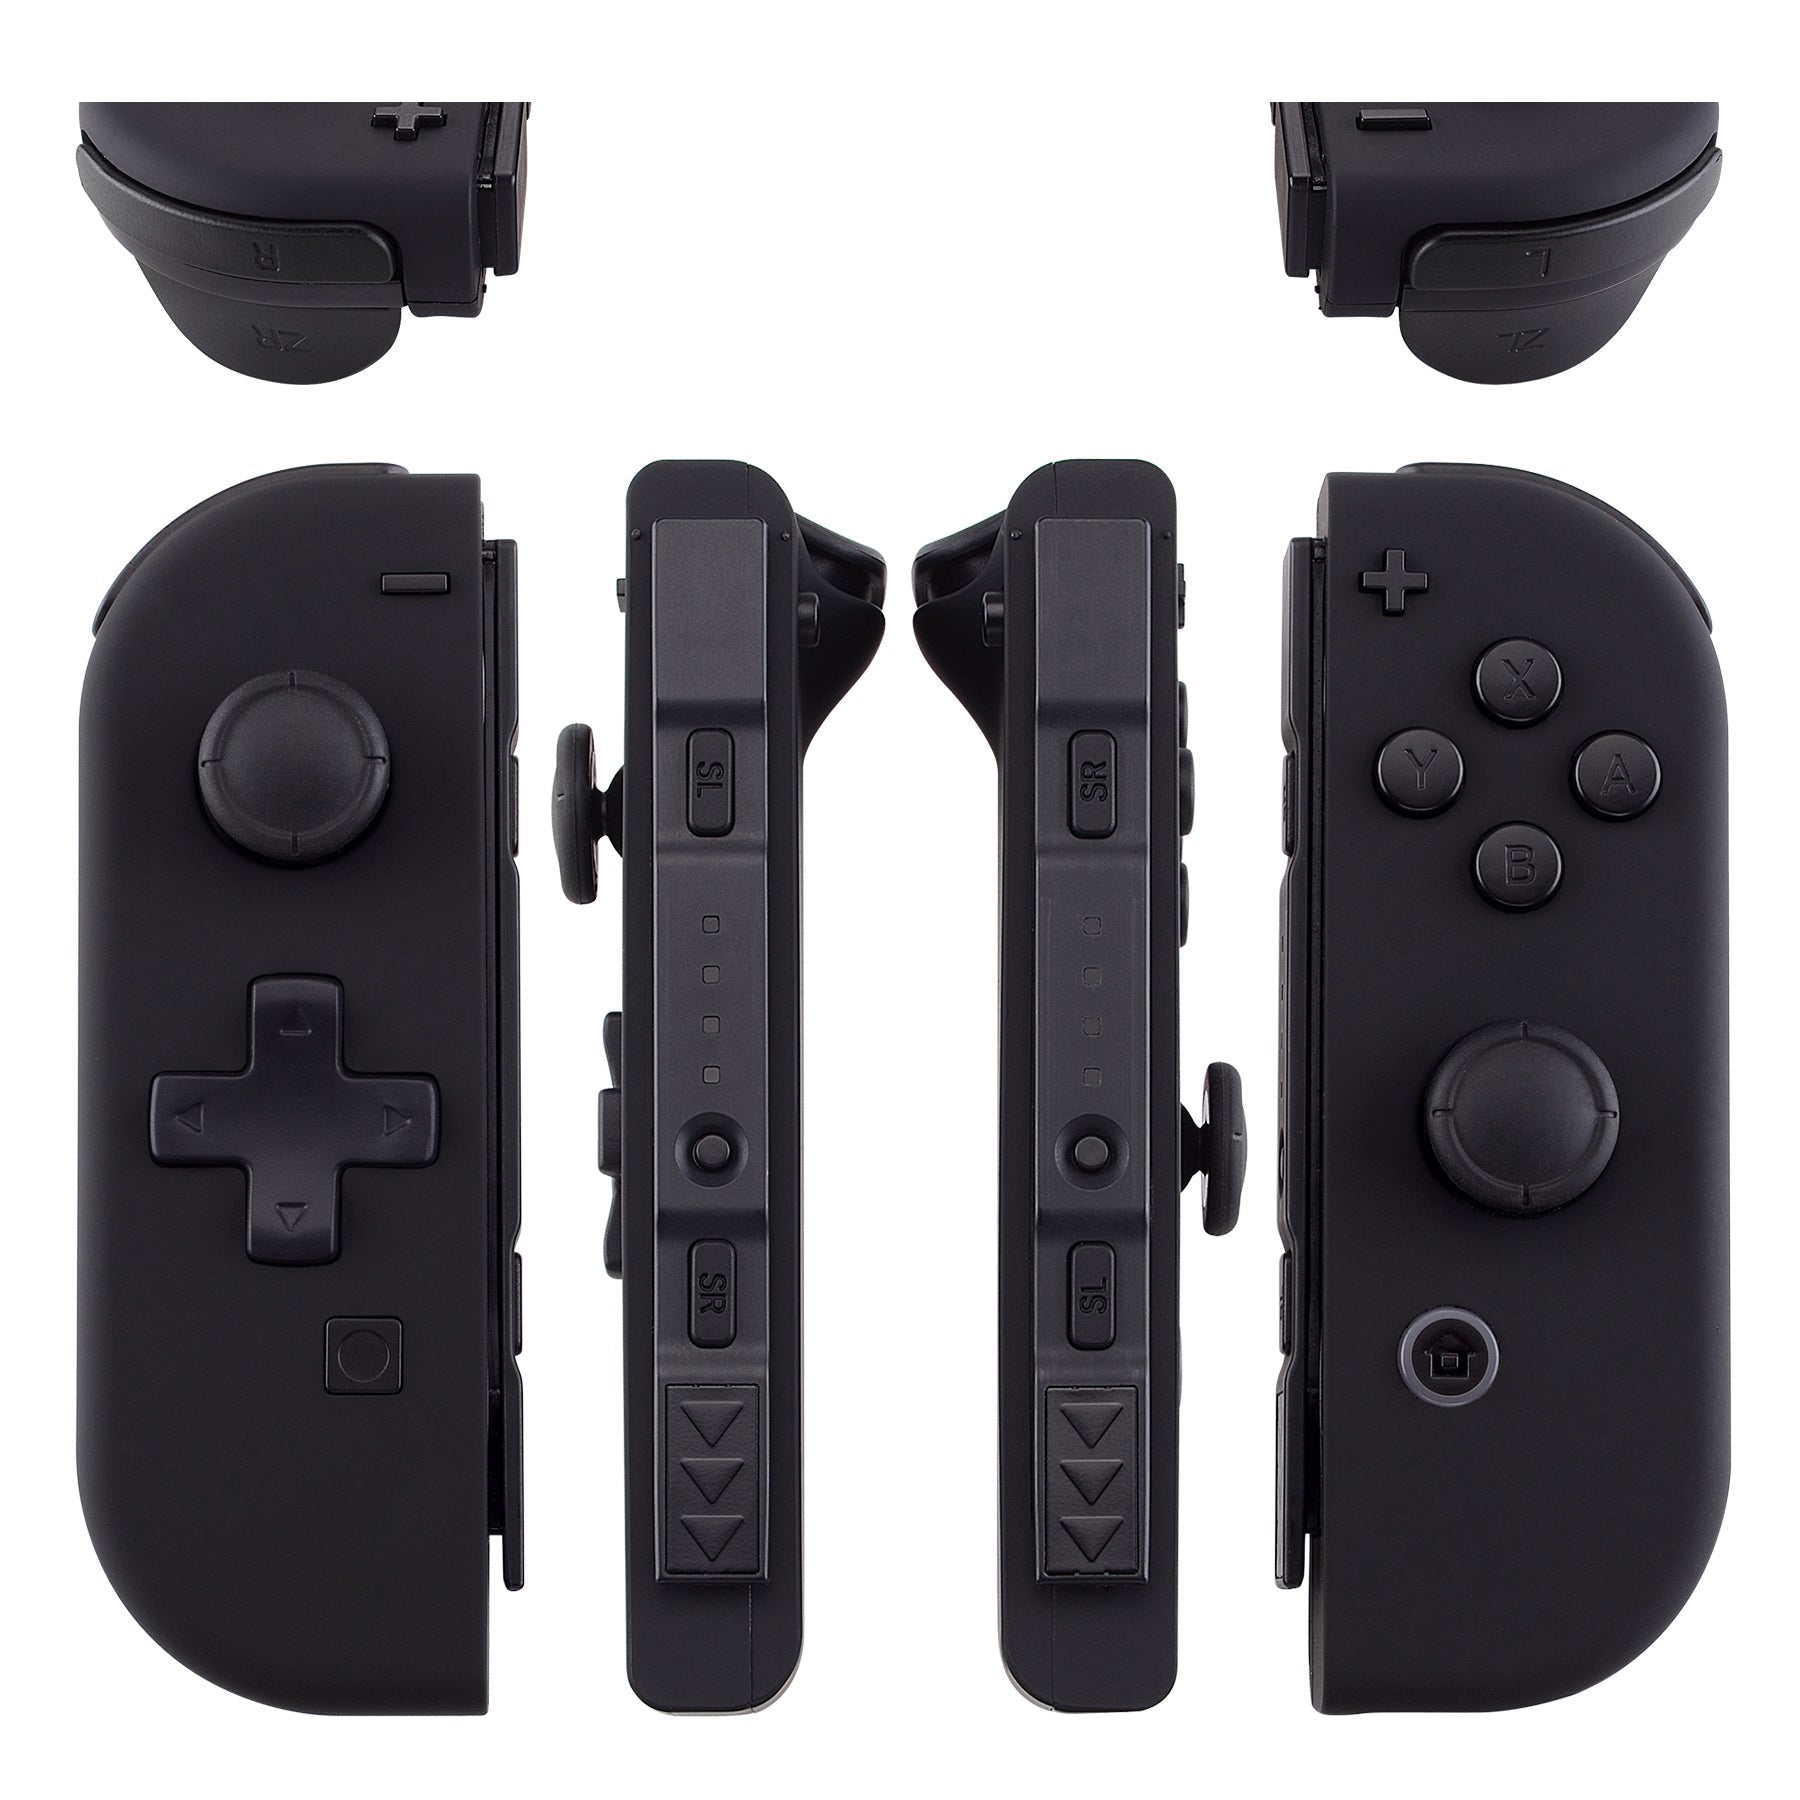 Joy Pad Mando compatible Nintendo Switch KLACK® – Klack Europe